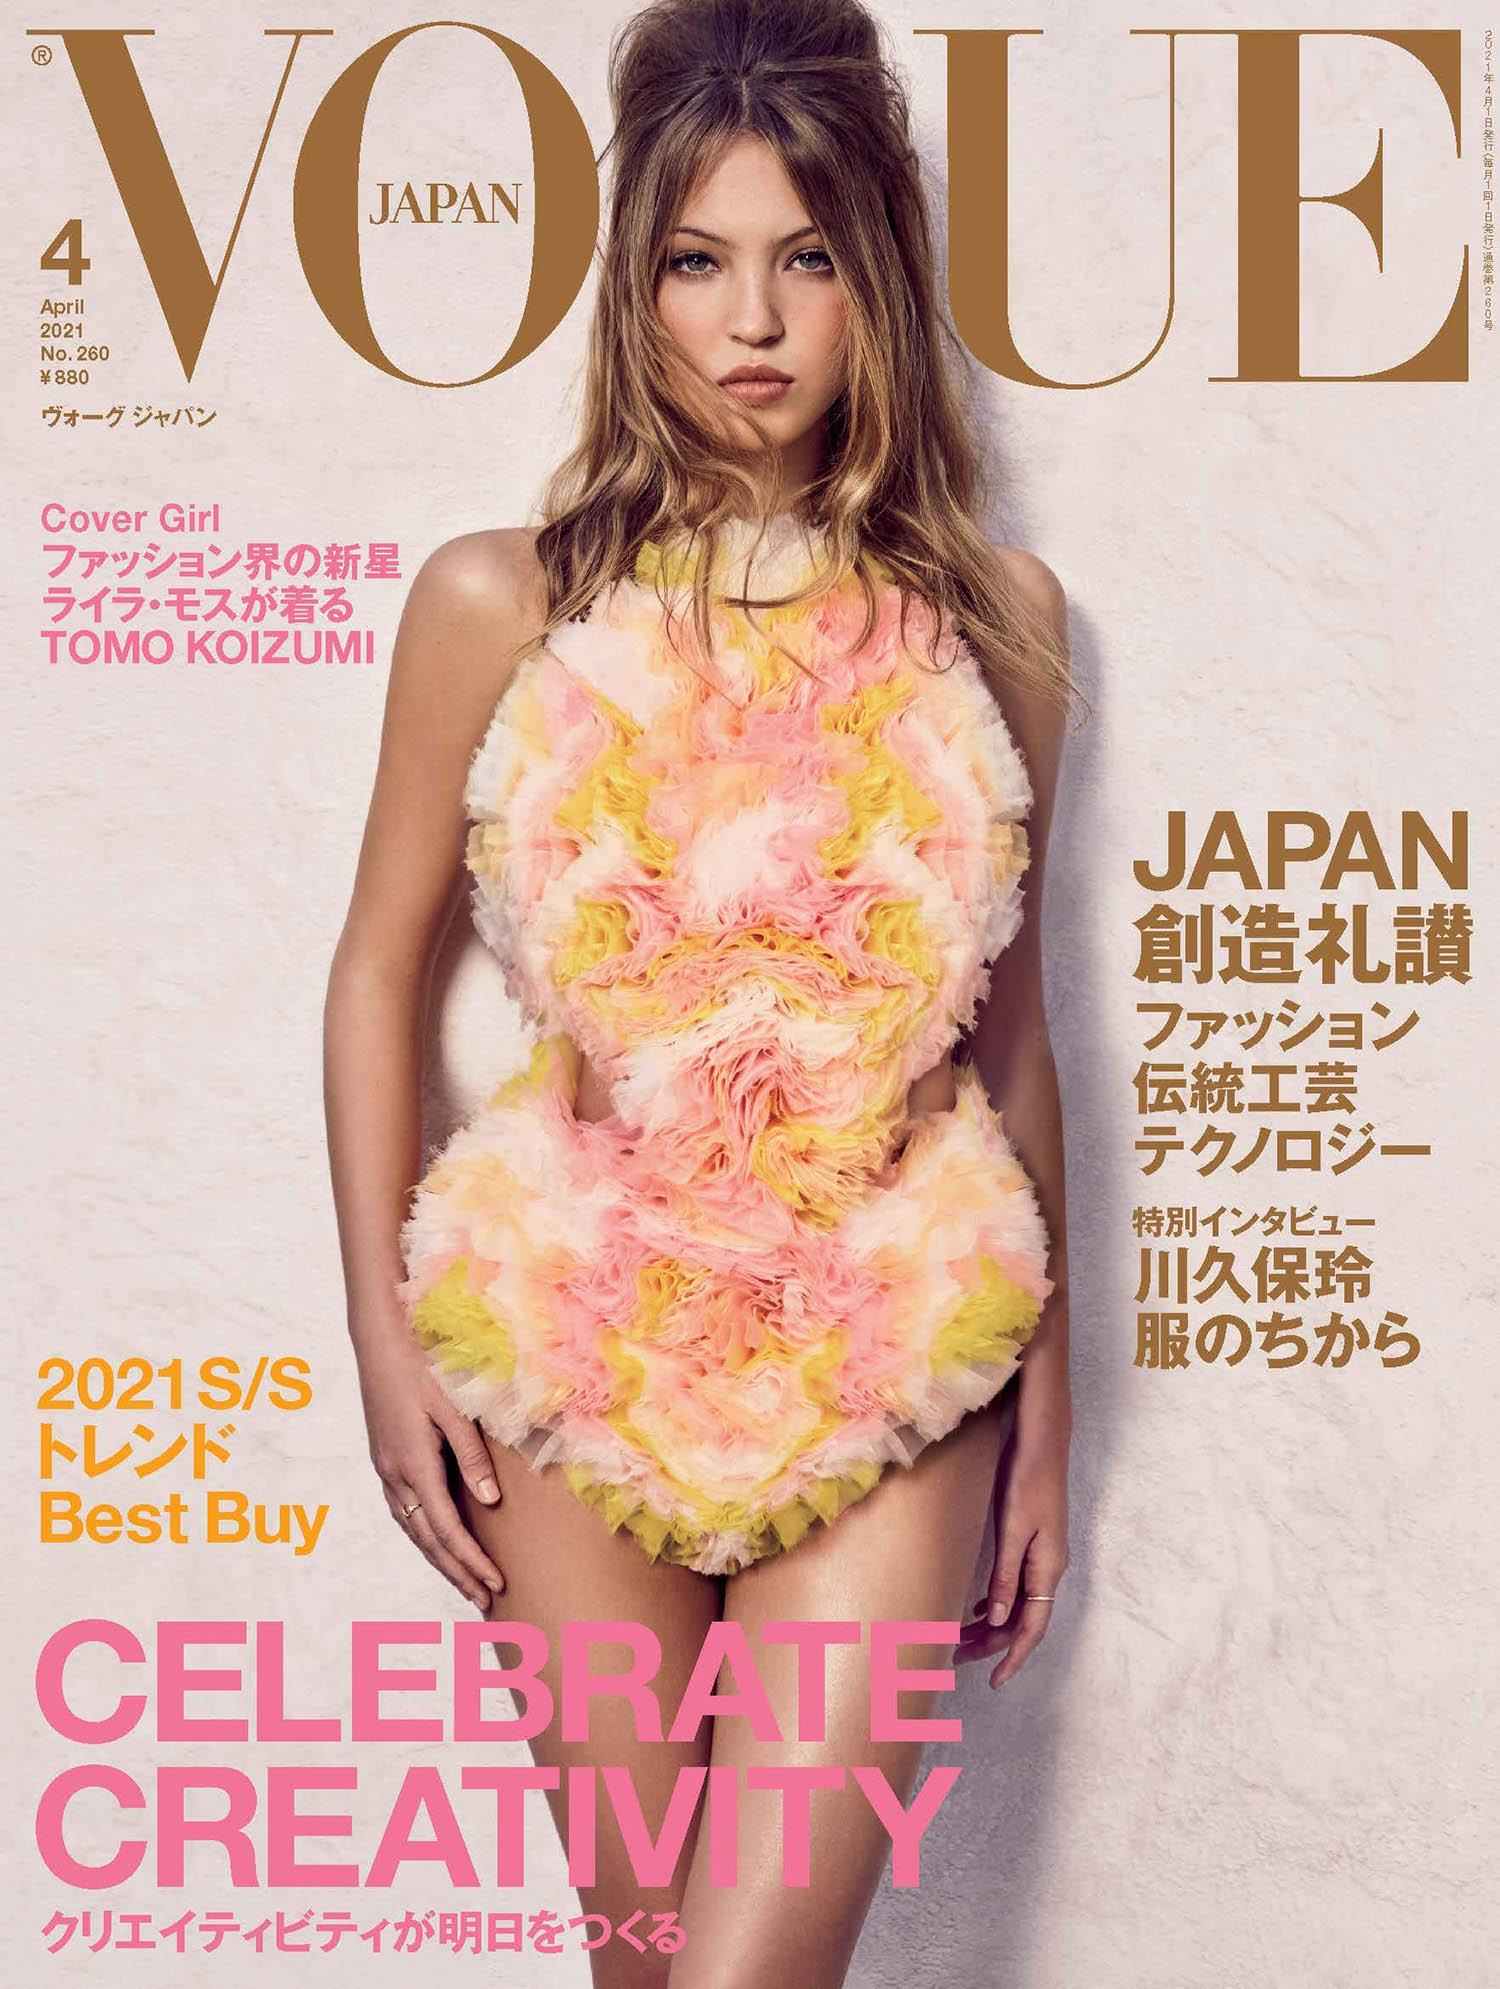 Lila Moss covers Vogue Japan April 2021 by Luigi & Iango